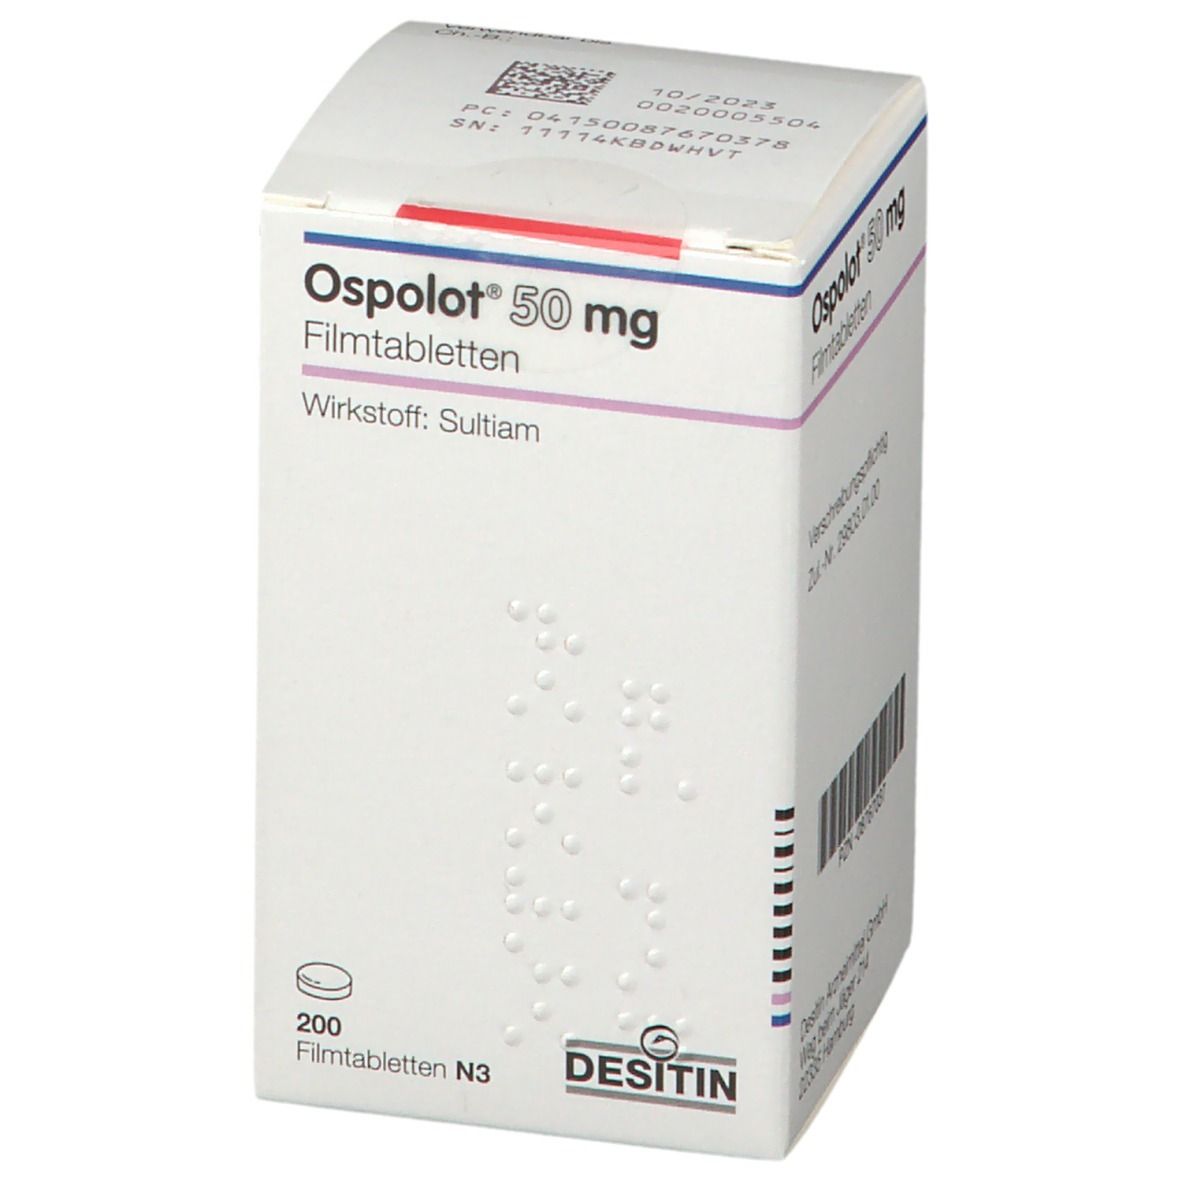 Ospolot® 50 mg